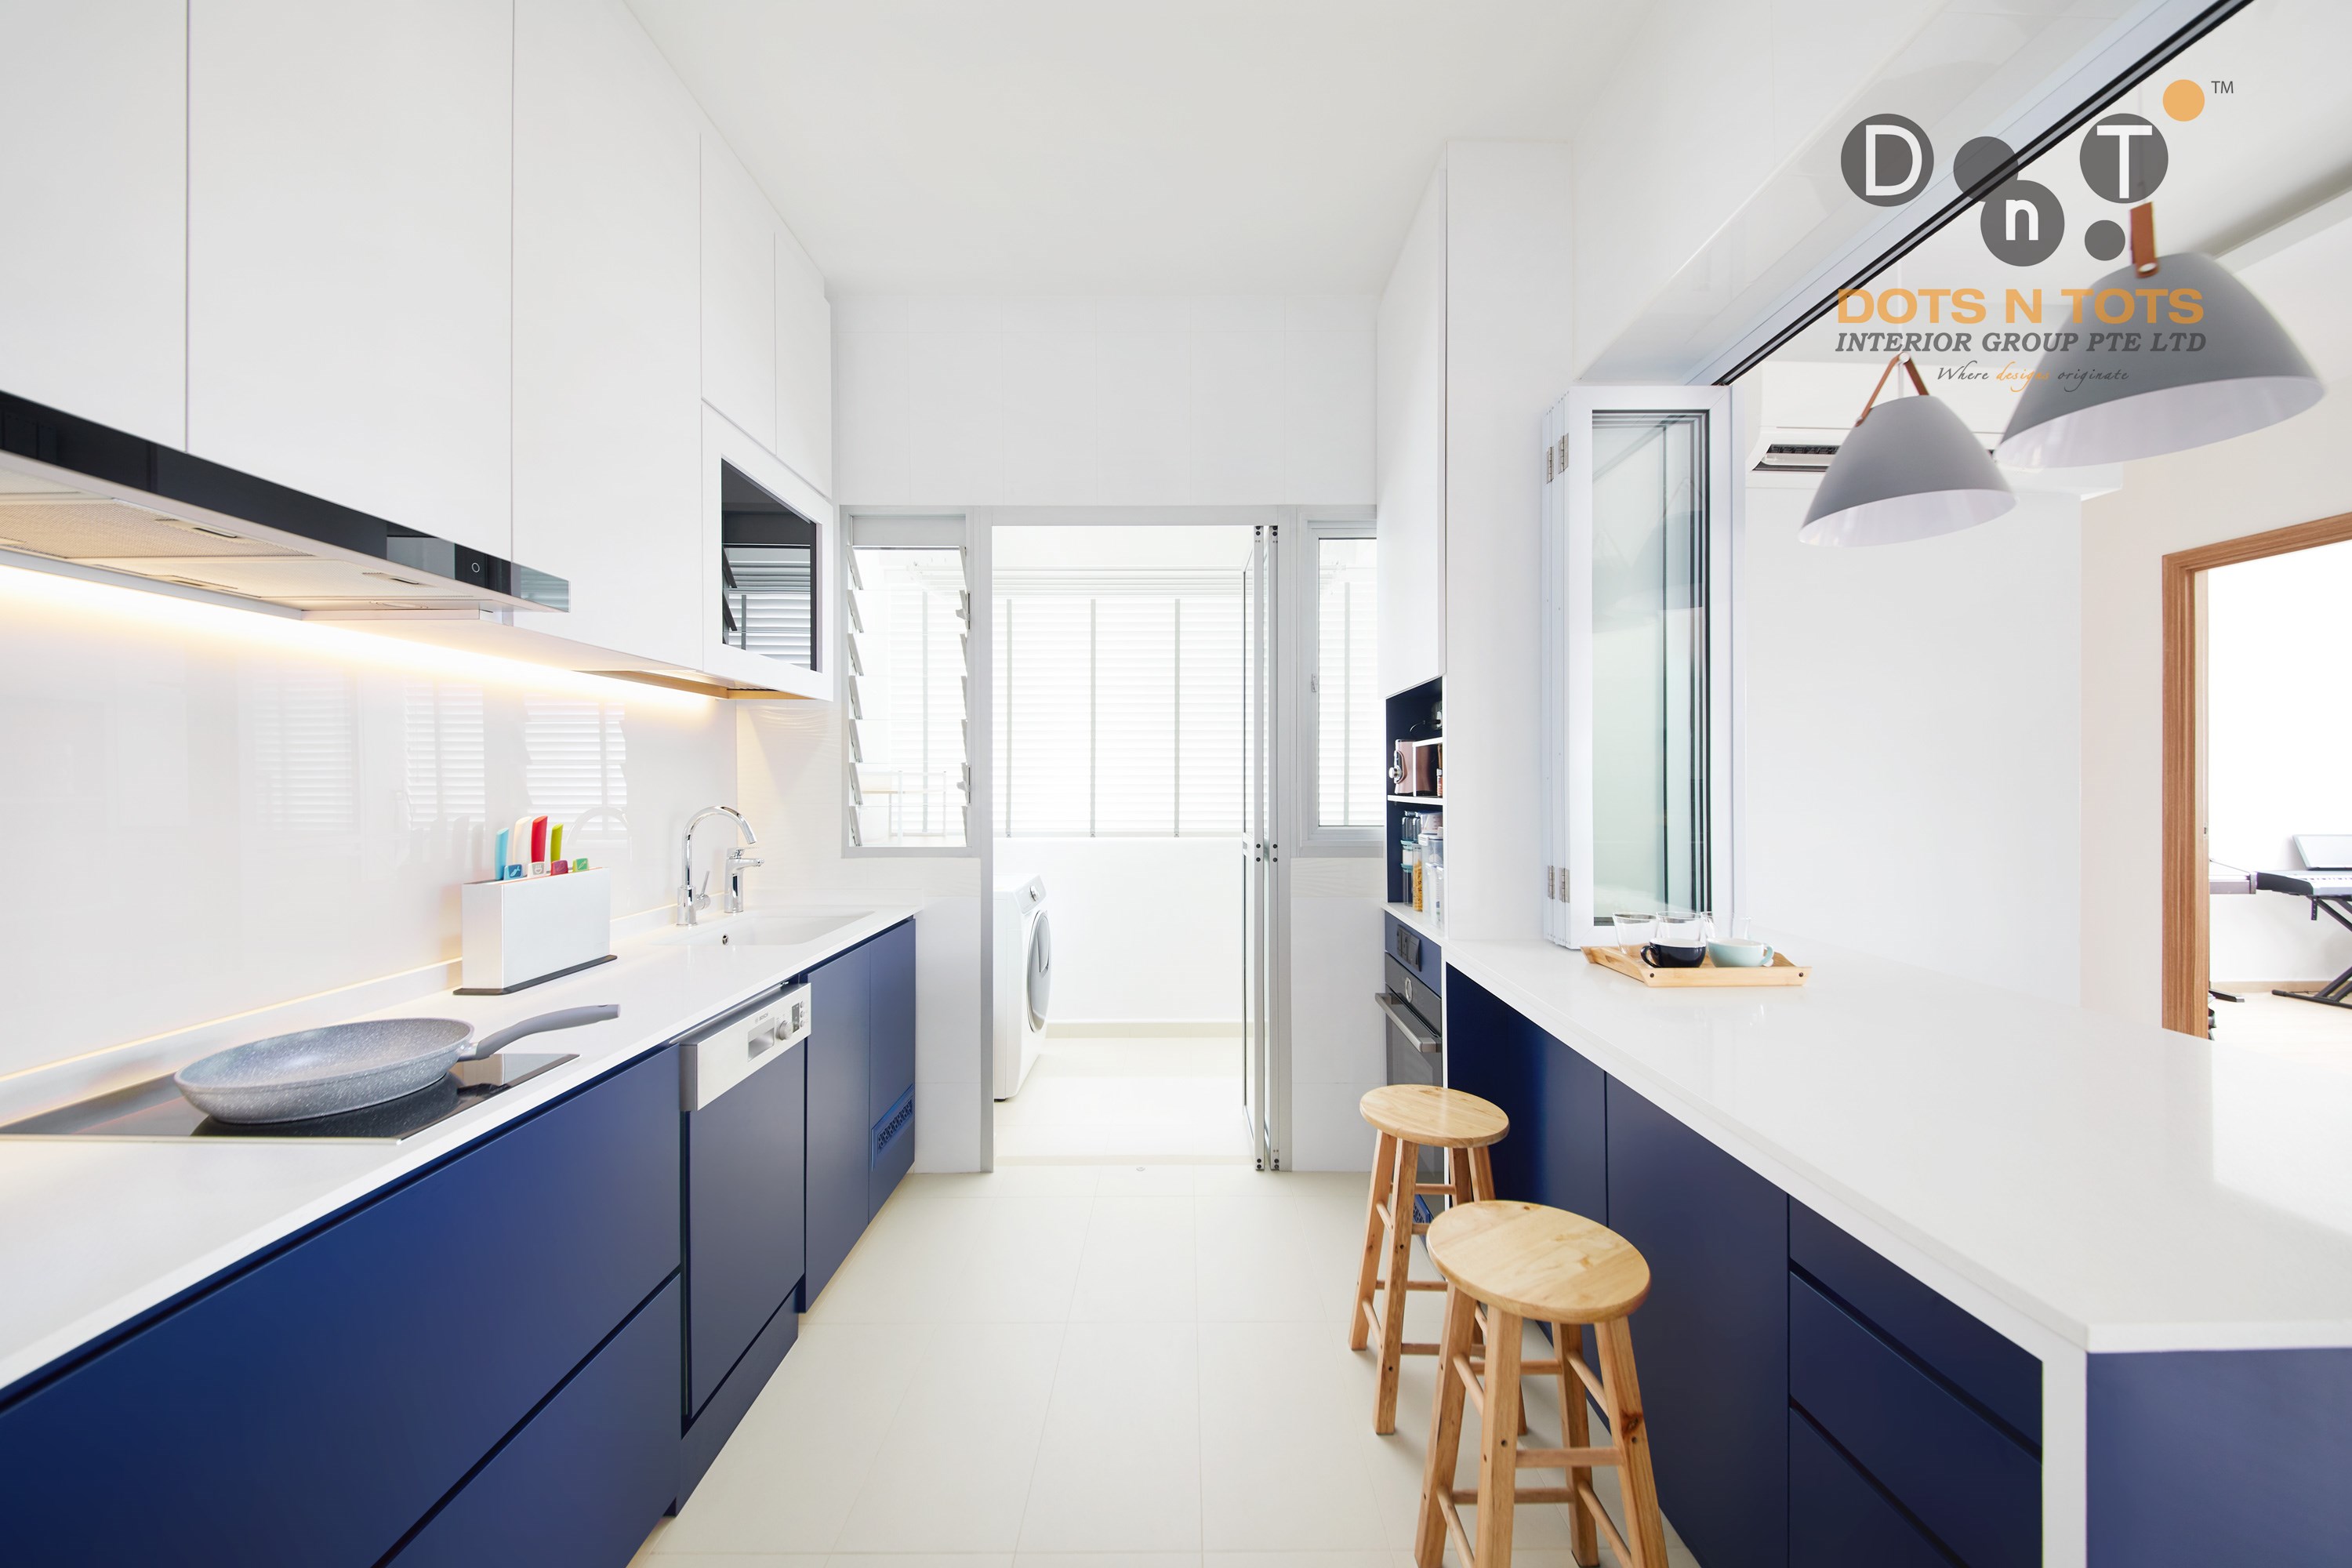 Scandinavian Design - Kitchen - HDB 4 Room - Design by Dots n Tots Interior Pte Ltd